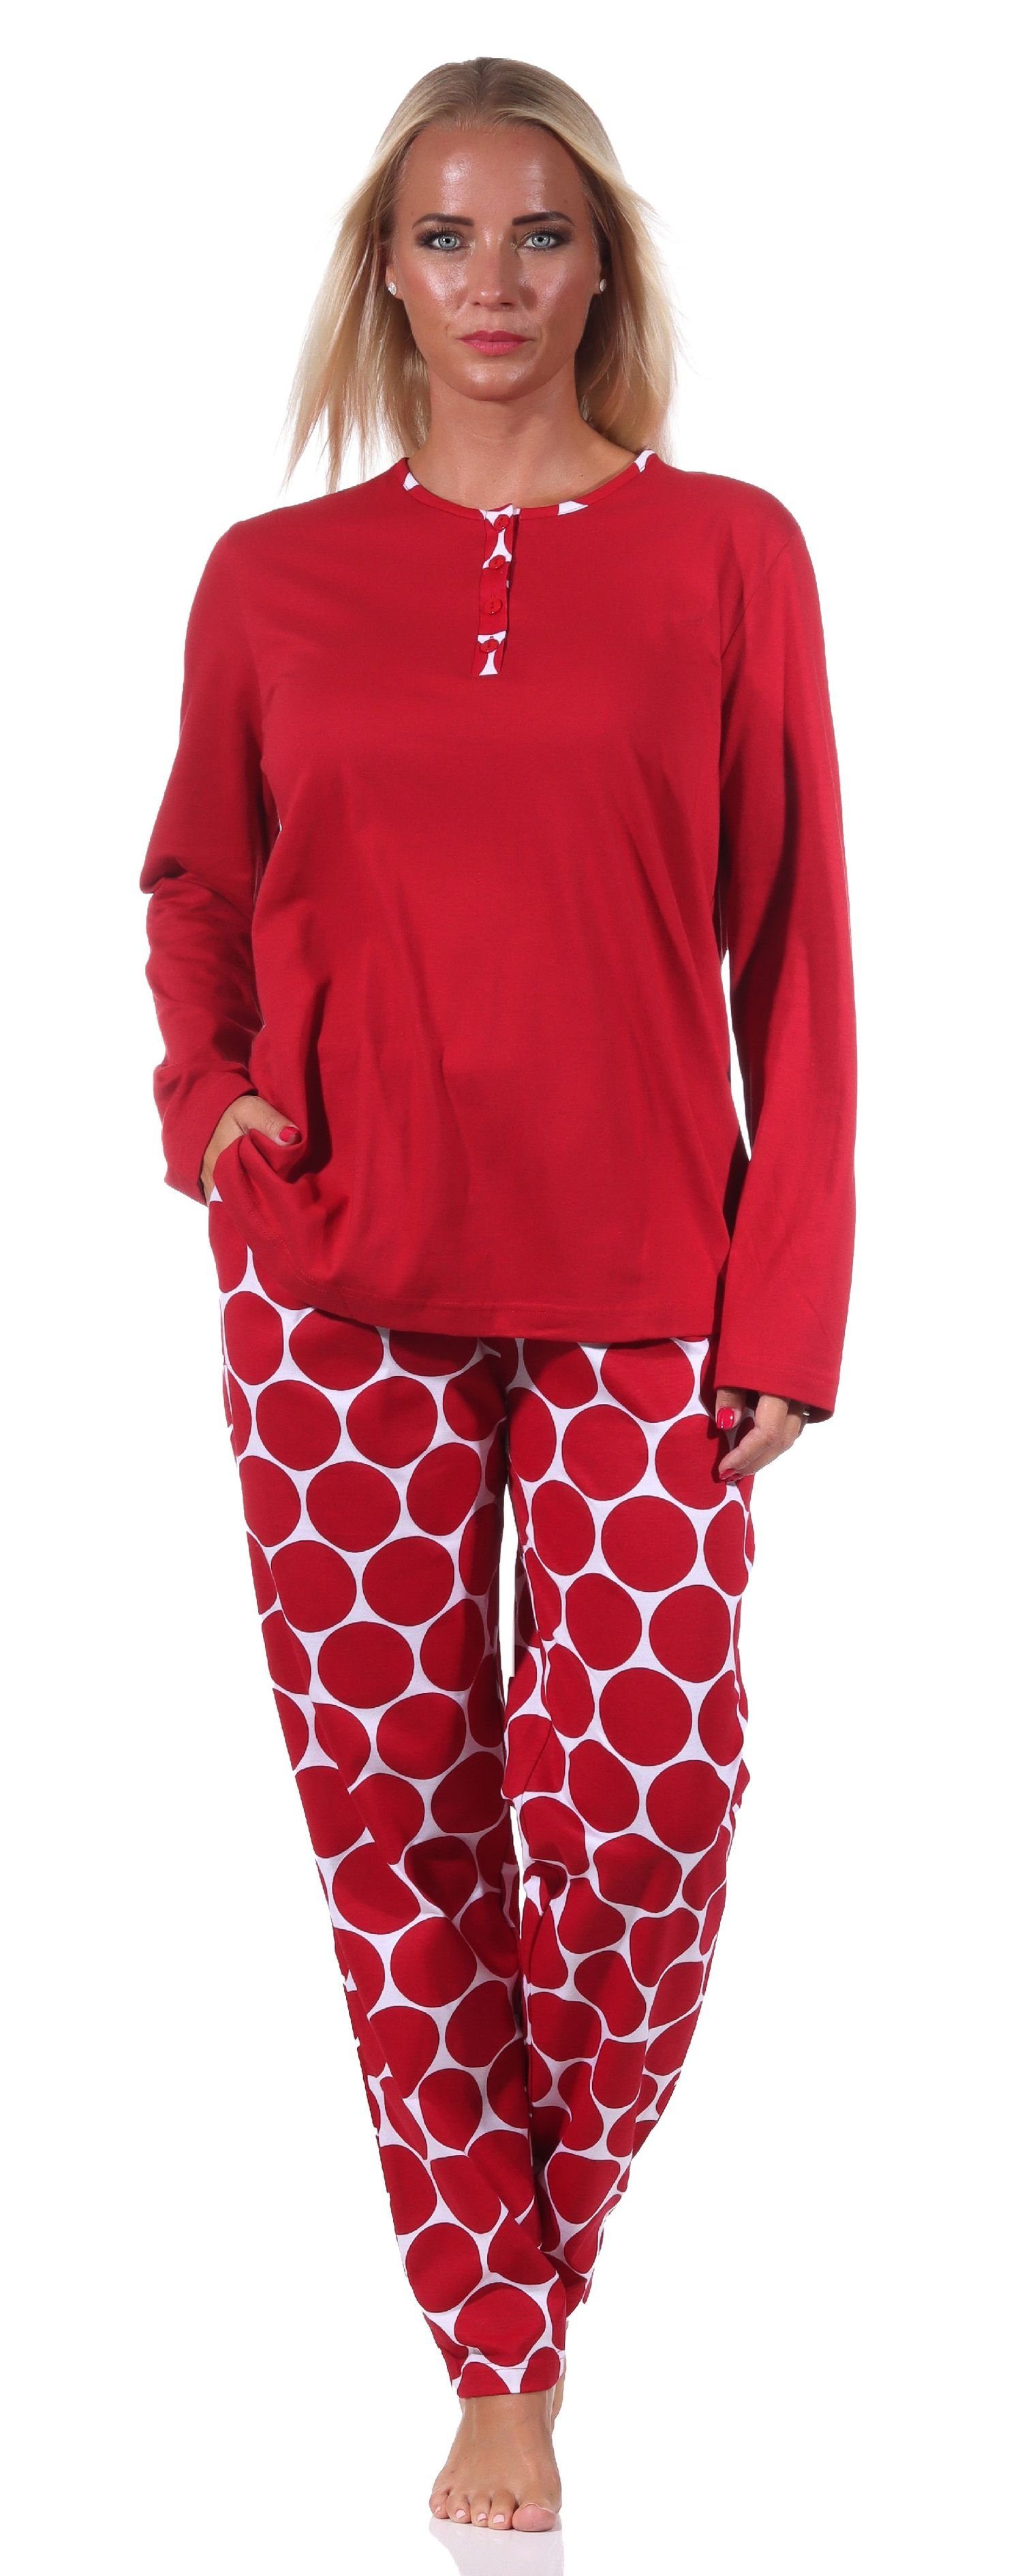 Normann Damen rot in Hose / Tupfen Pyjama langarm Optik Schlafanzug, Punkte Pyjama